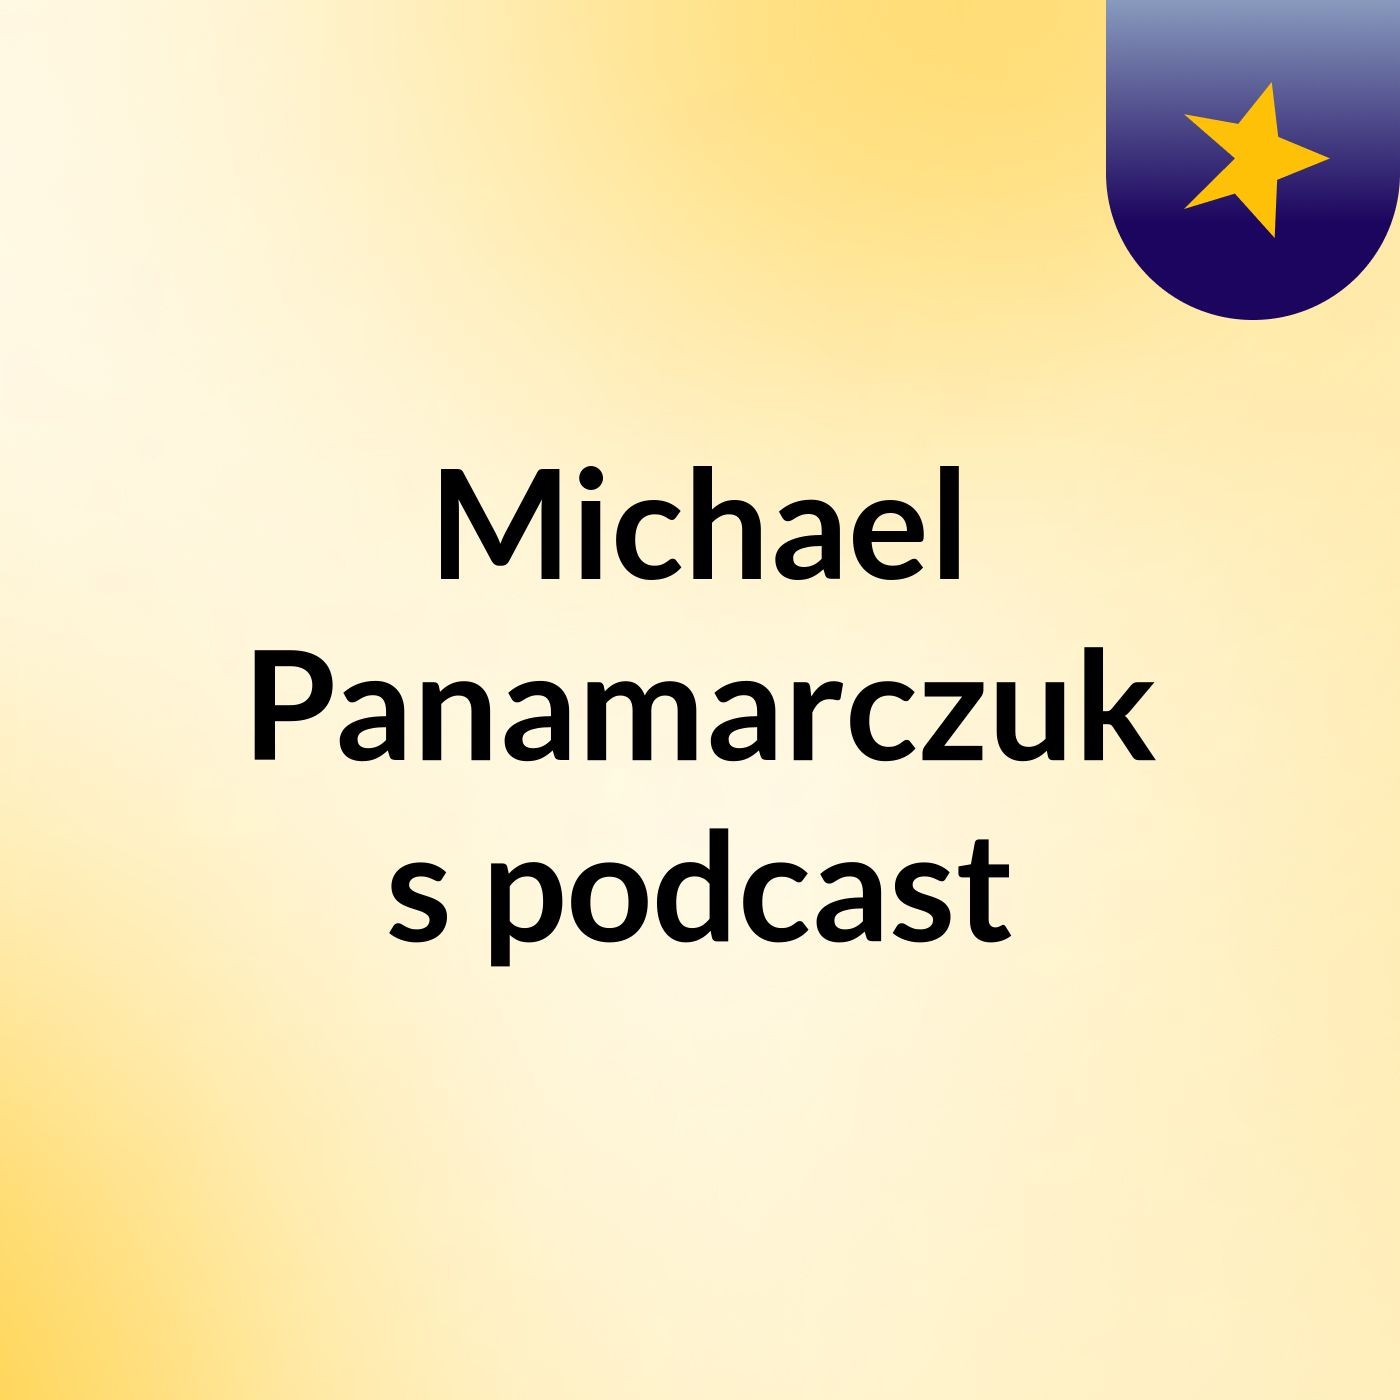 Episode 8 - Michael Panamarczuk's podcast